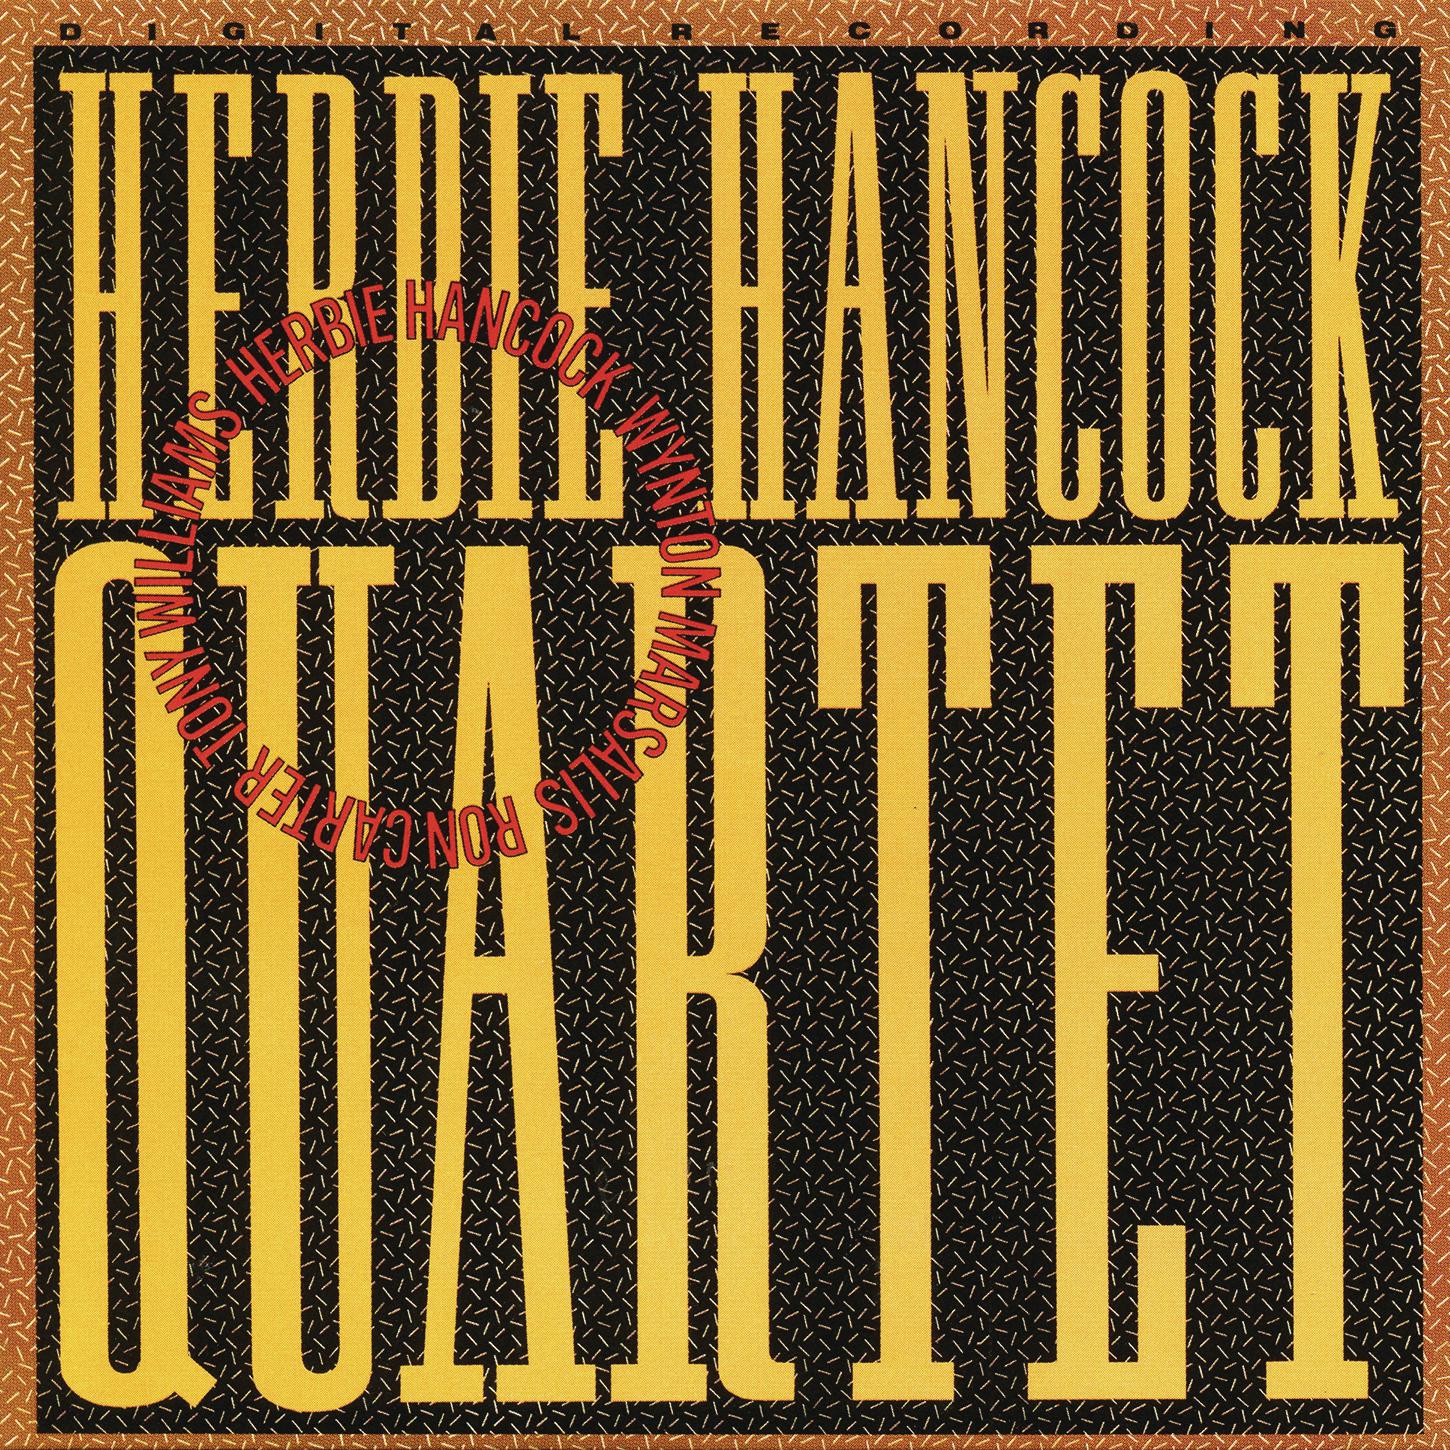 Herbie Hancock – Quartet (1982/2000) [HDTracks FLAC 24bit/96kHz]